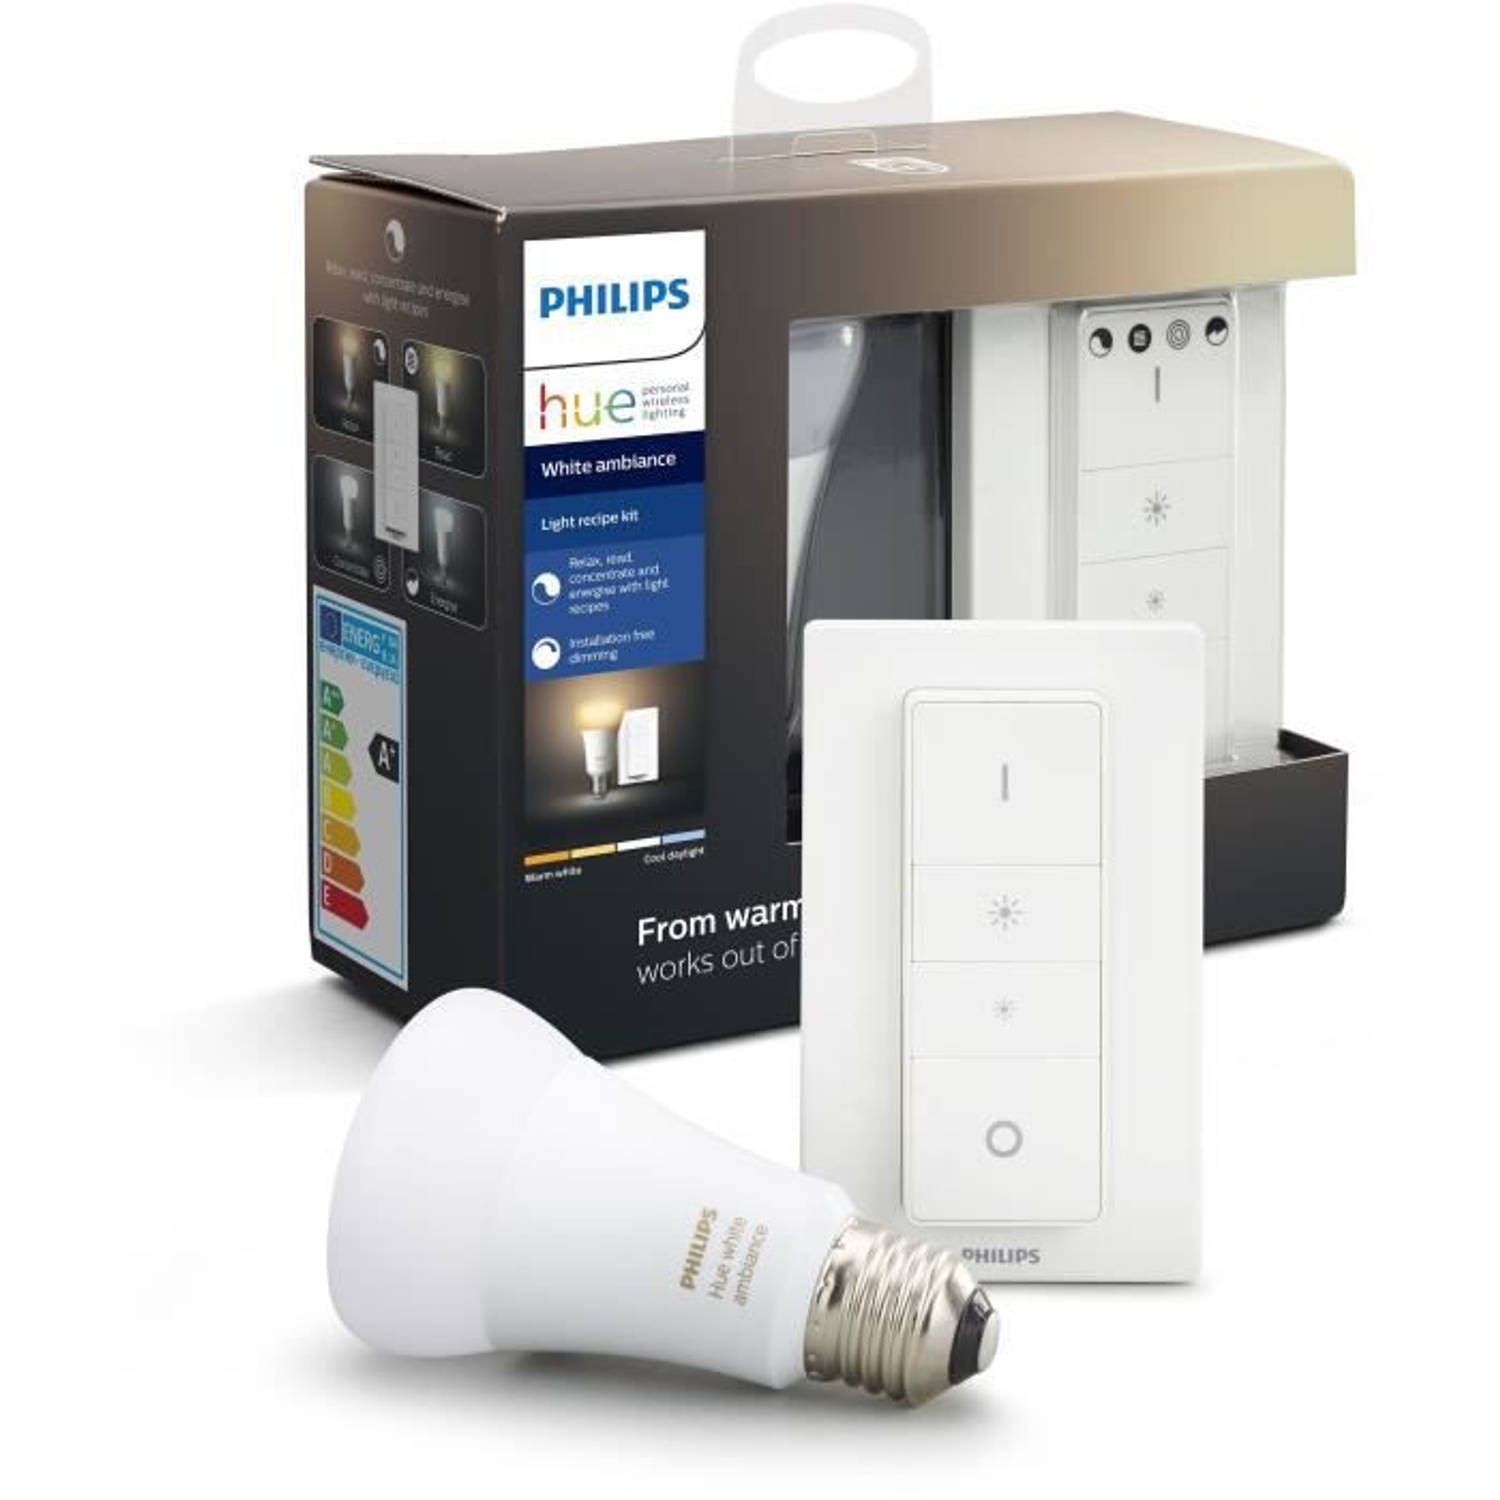 Philips hue white ambiance verlichtingsset lamp en dimmer afstandsbediening - 10 w - bluetooth Blokker